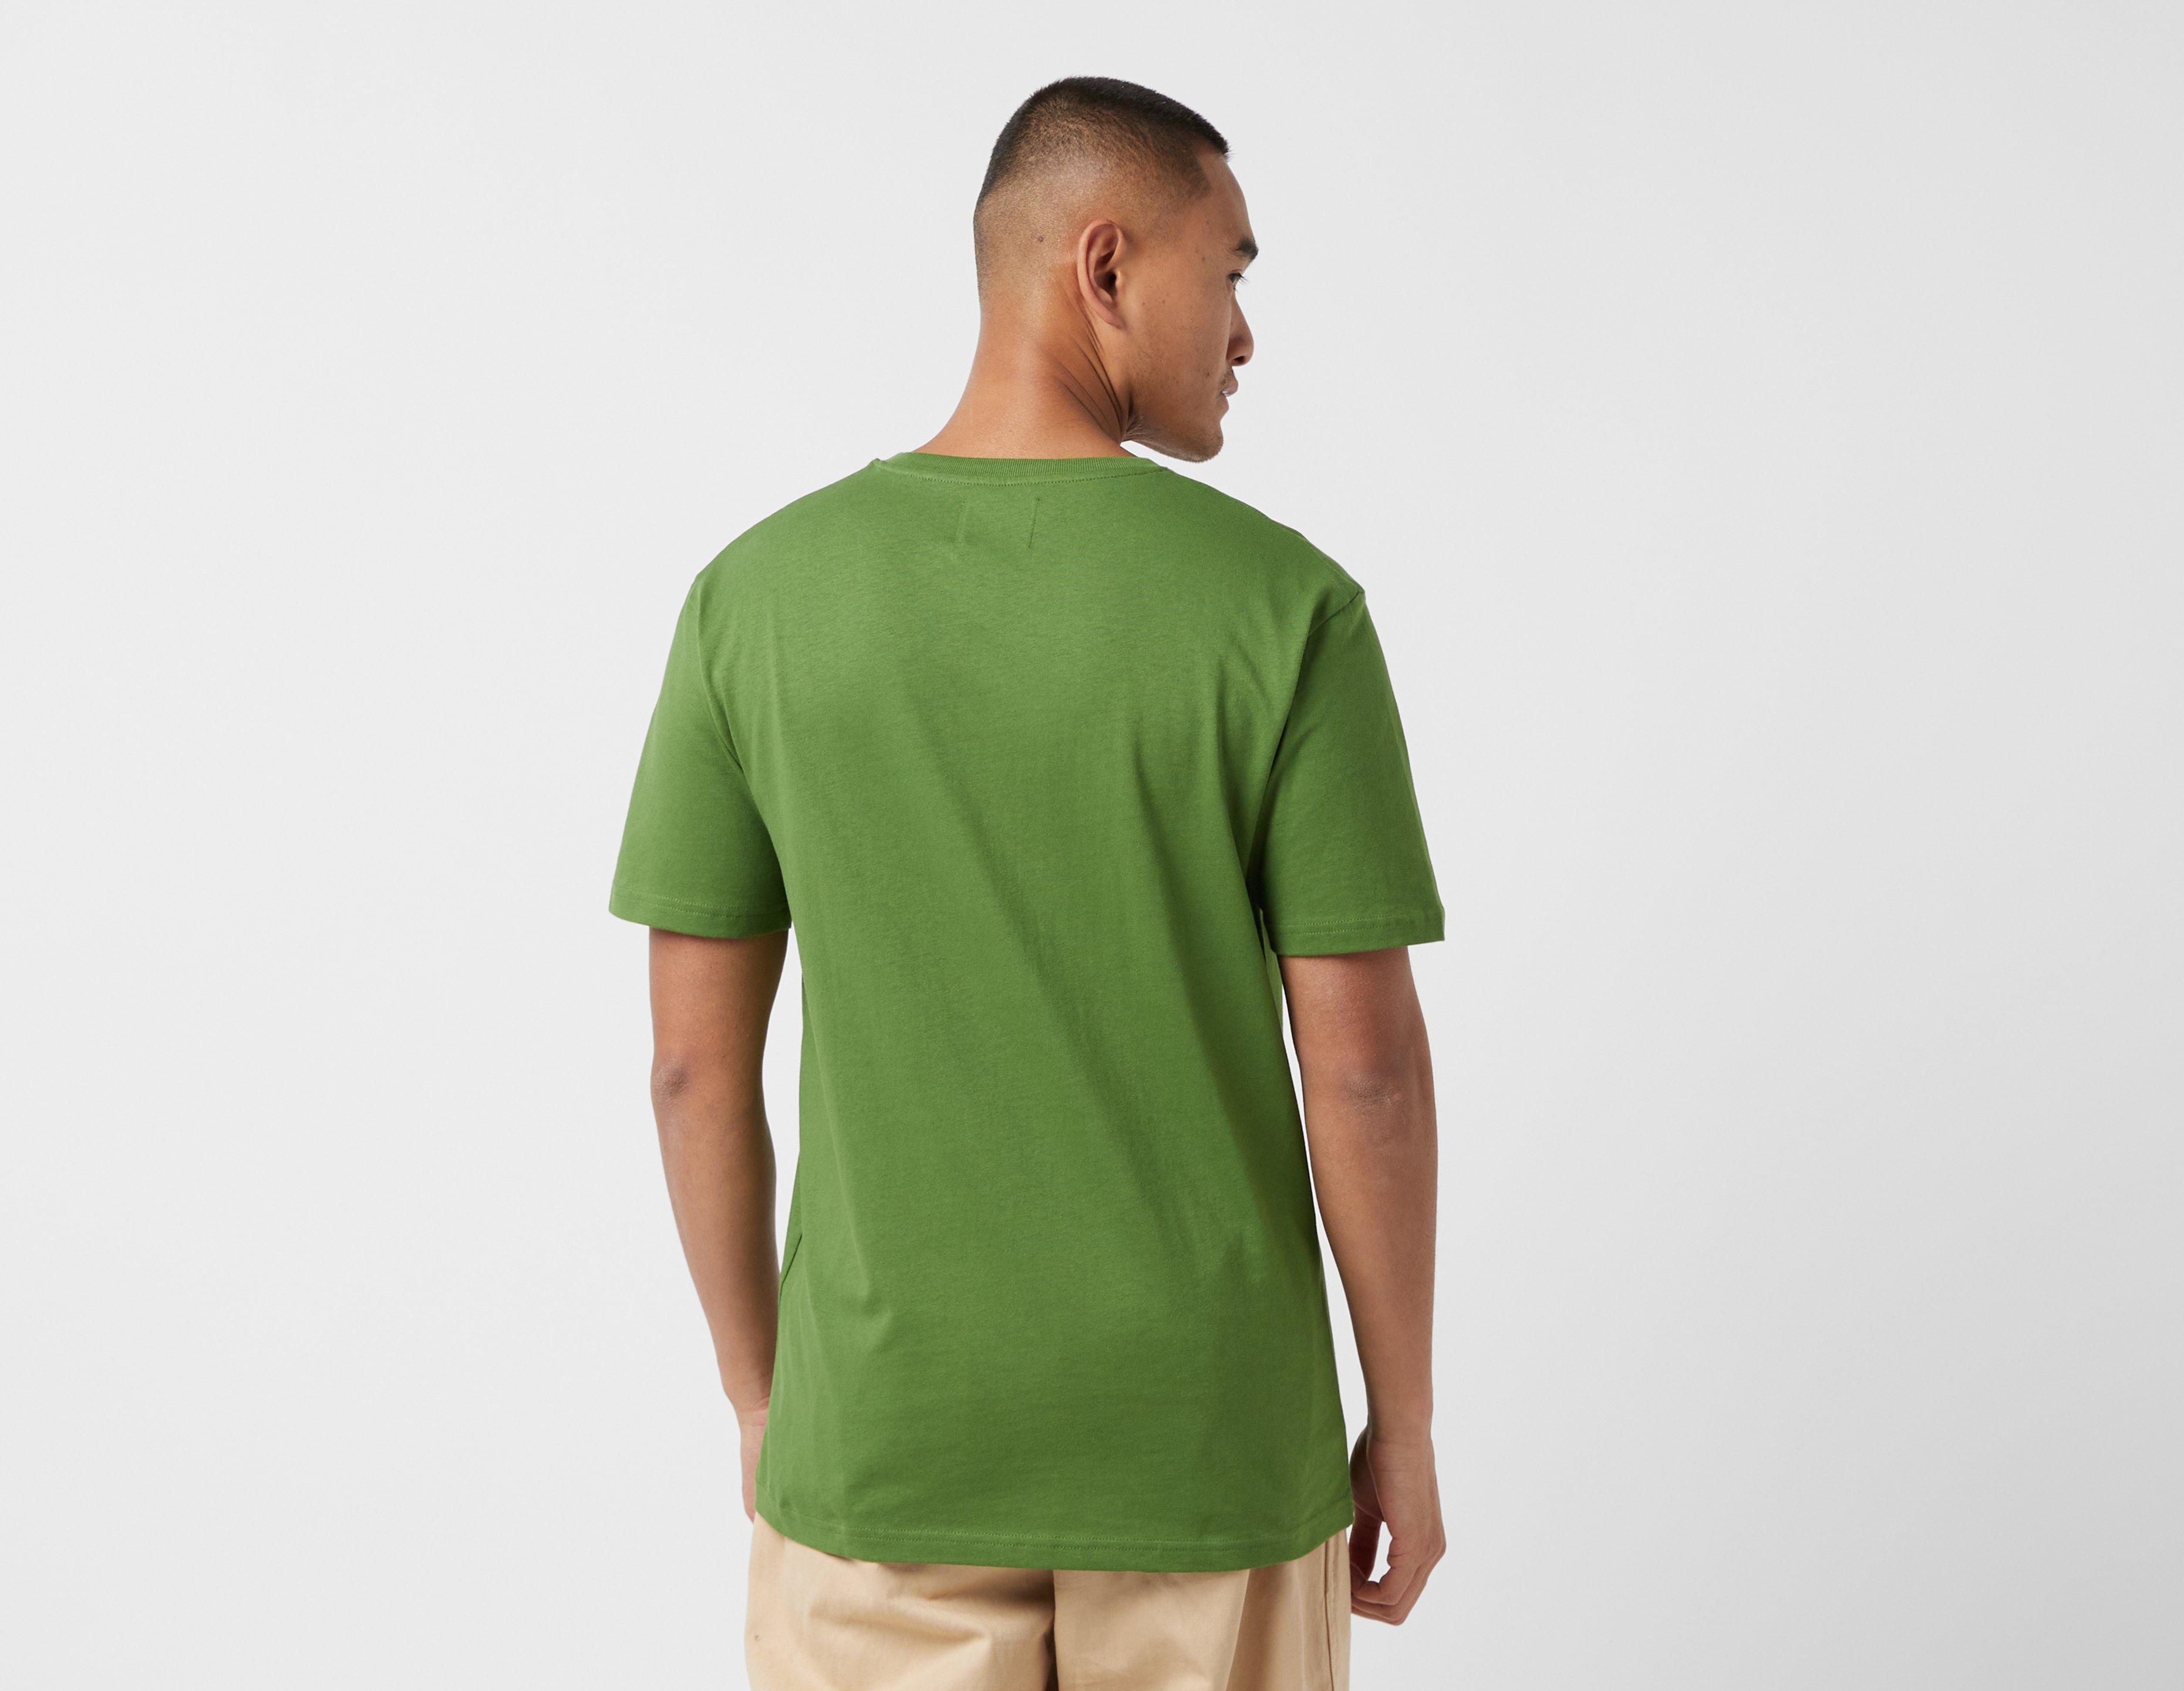 Klassic cotton A sweatshirt by | Shirt Wood Green T Wood - Toni Double Script Trey - Healthdesign? neutri Ace